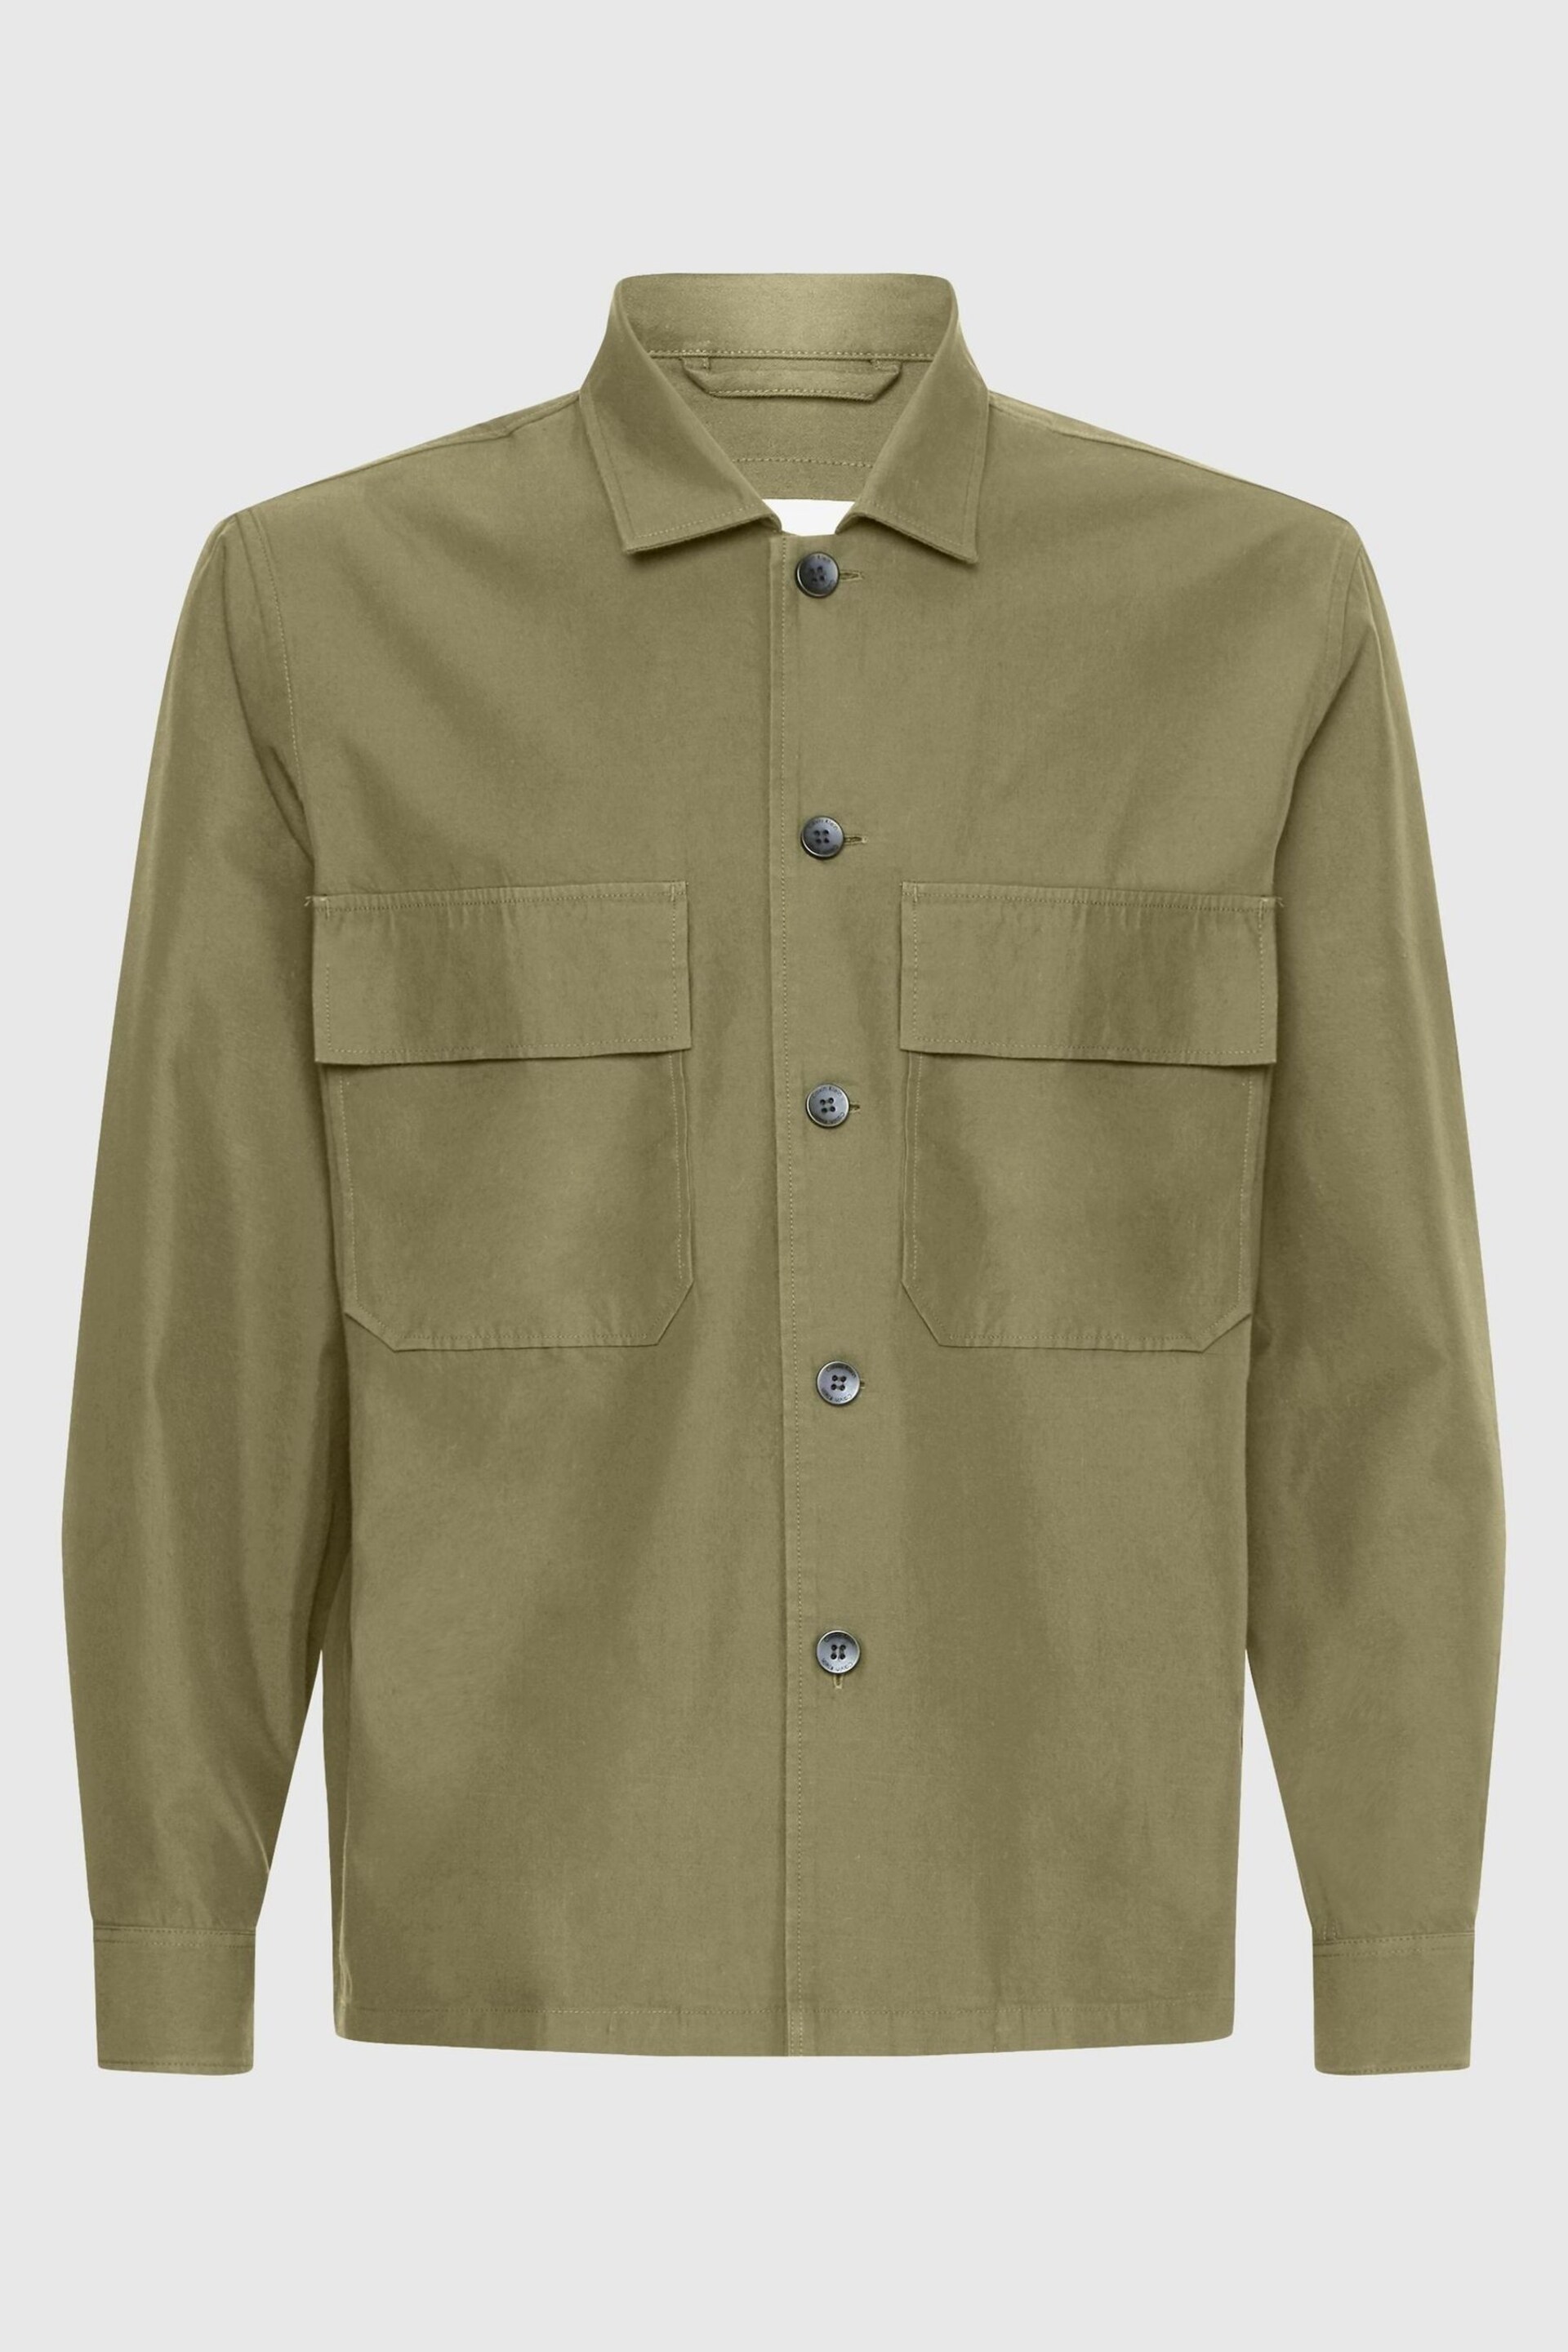 Calvin Klein Green Cargo Nylon Overshirt - Image 4 of 4